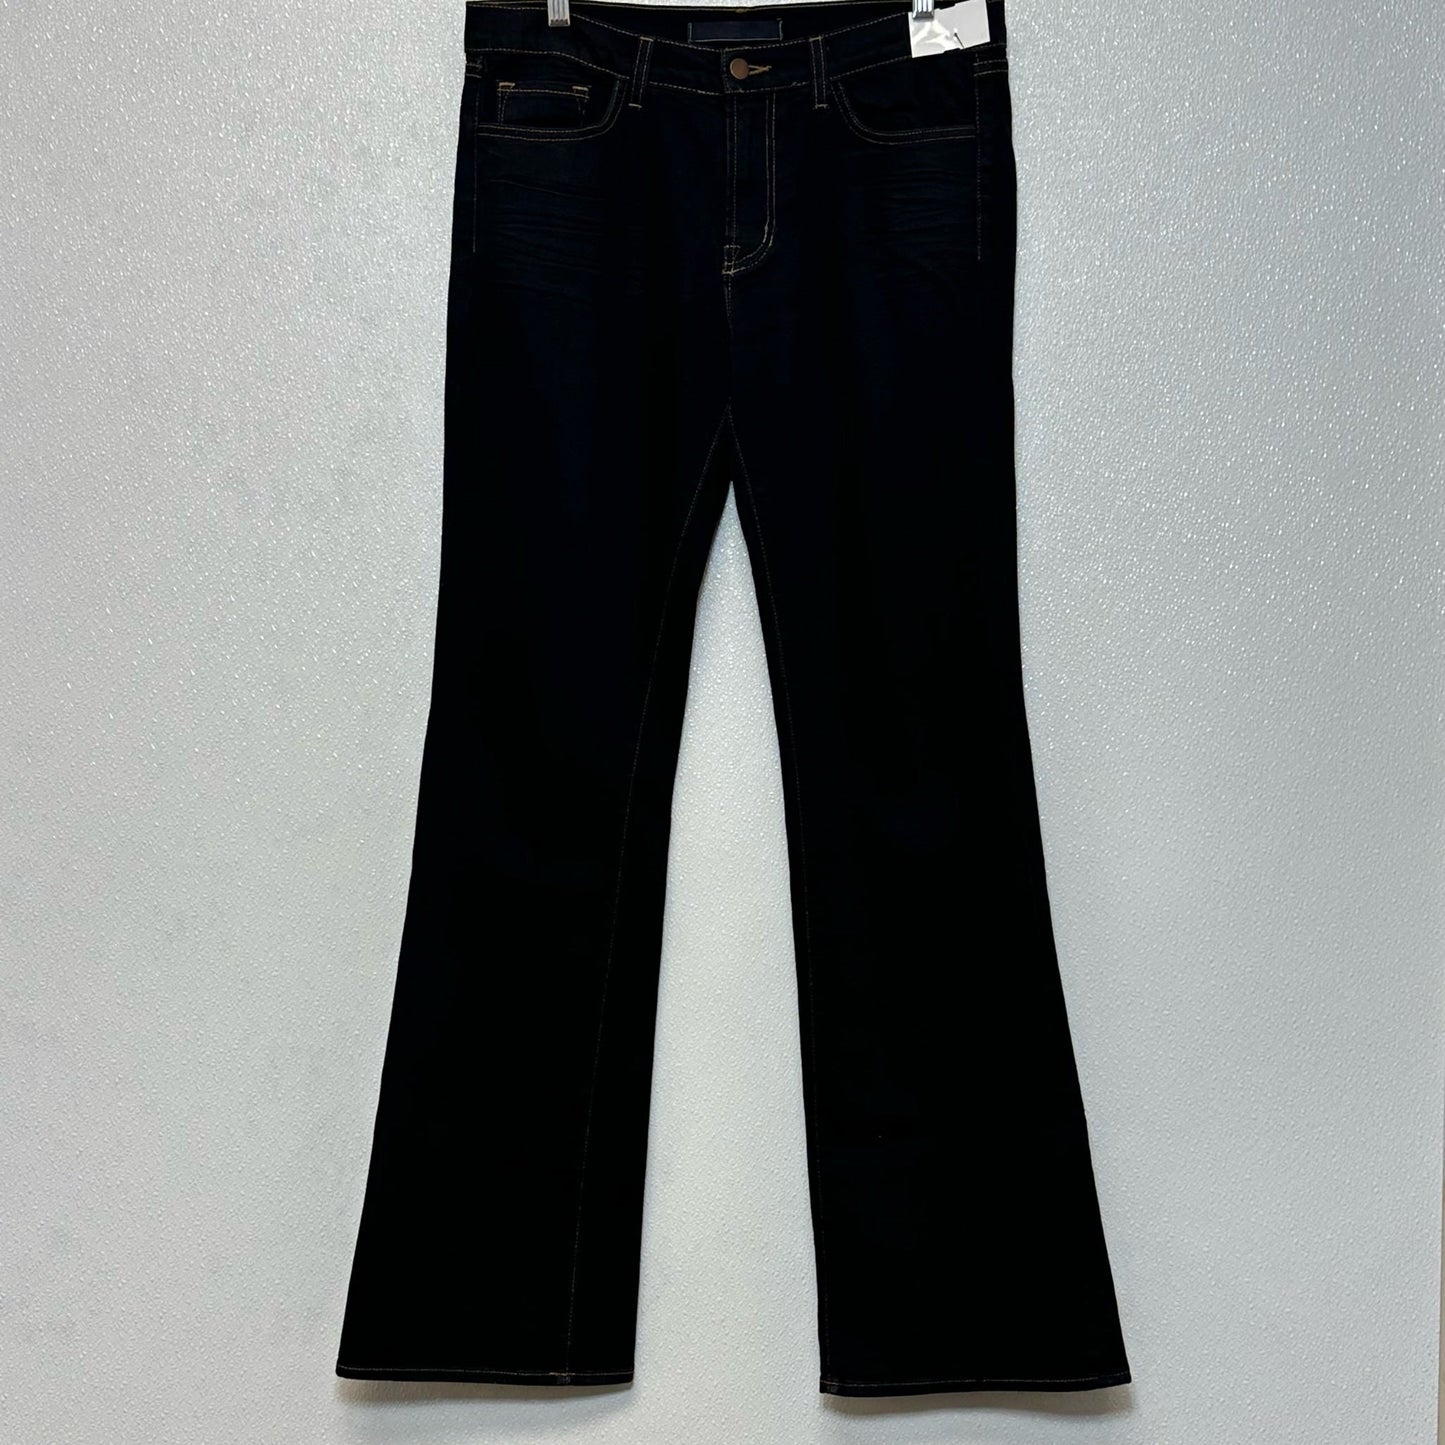 Jeans Skinny By J Brand  Size: 8